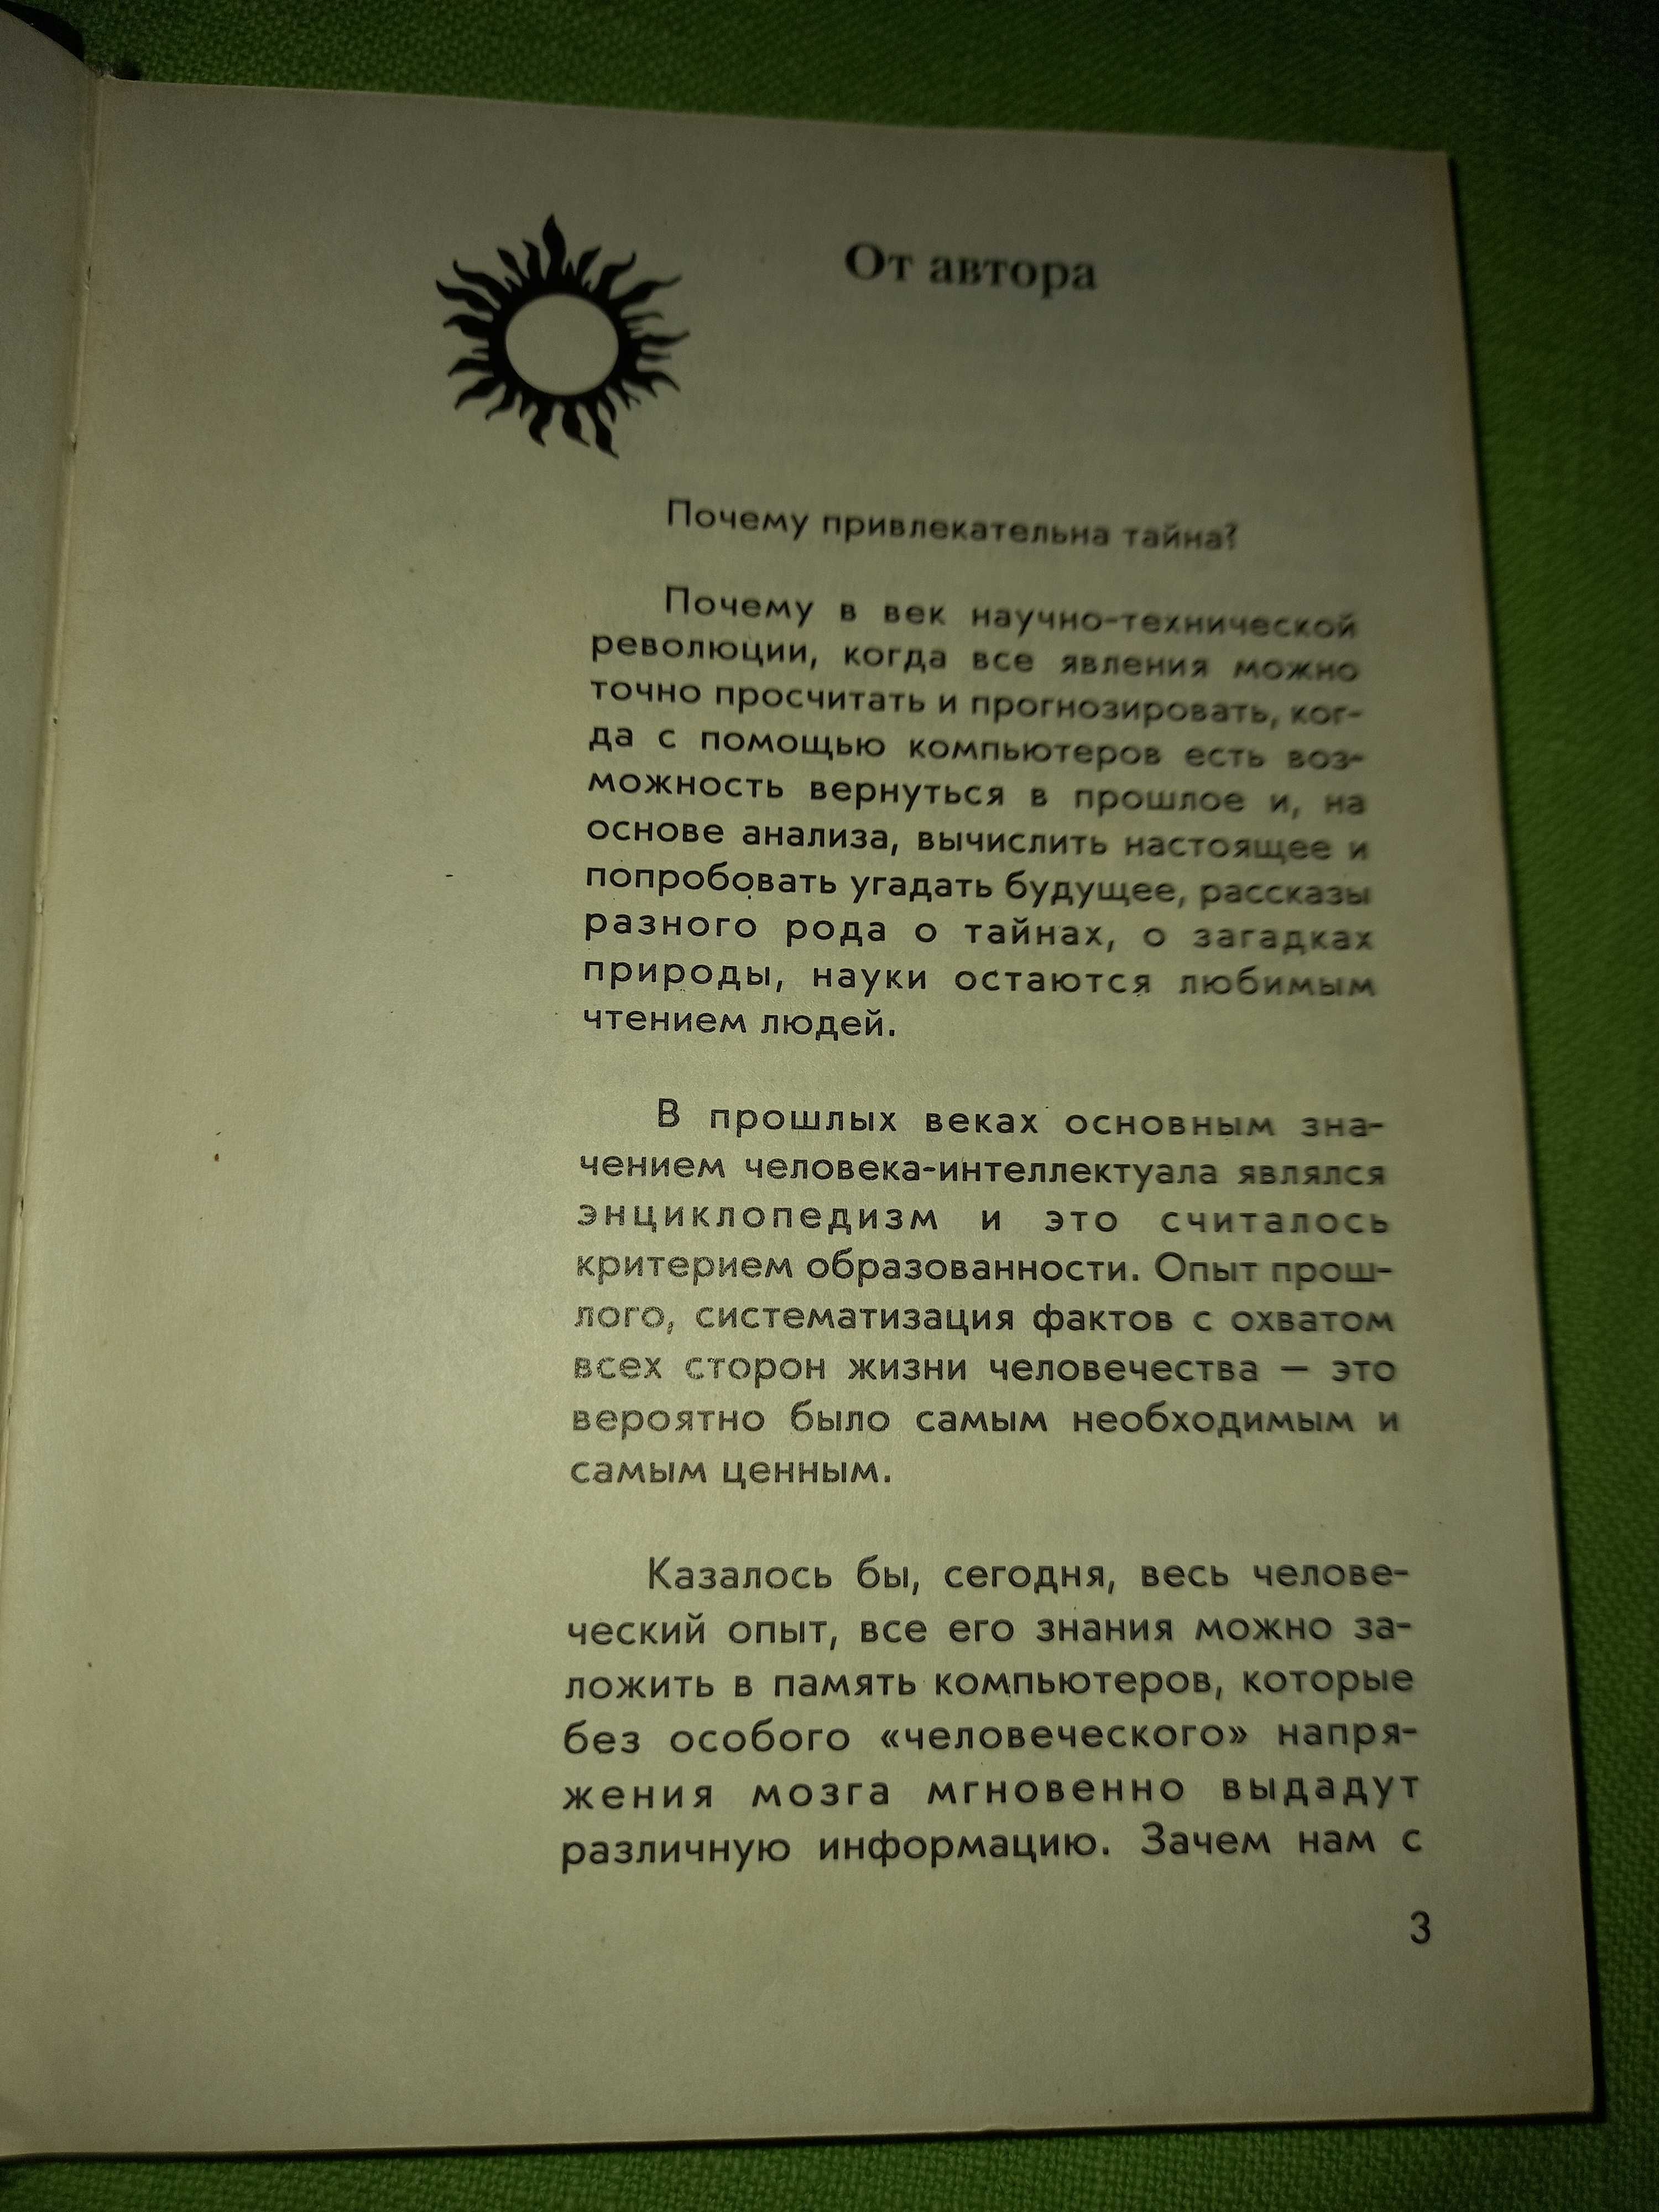 Книга Цаган-Кувюн Параис Краткая популярная астрология для всех. 1990